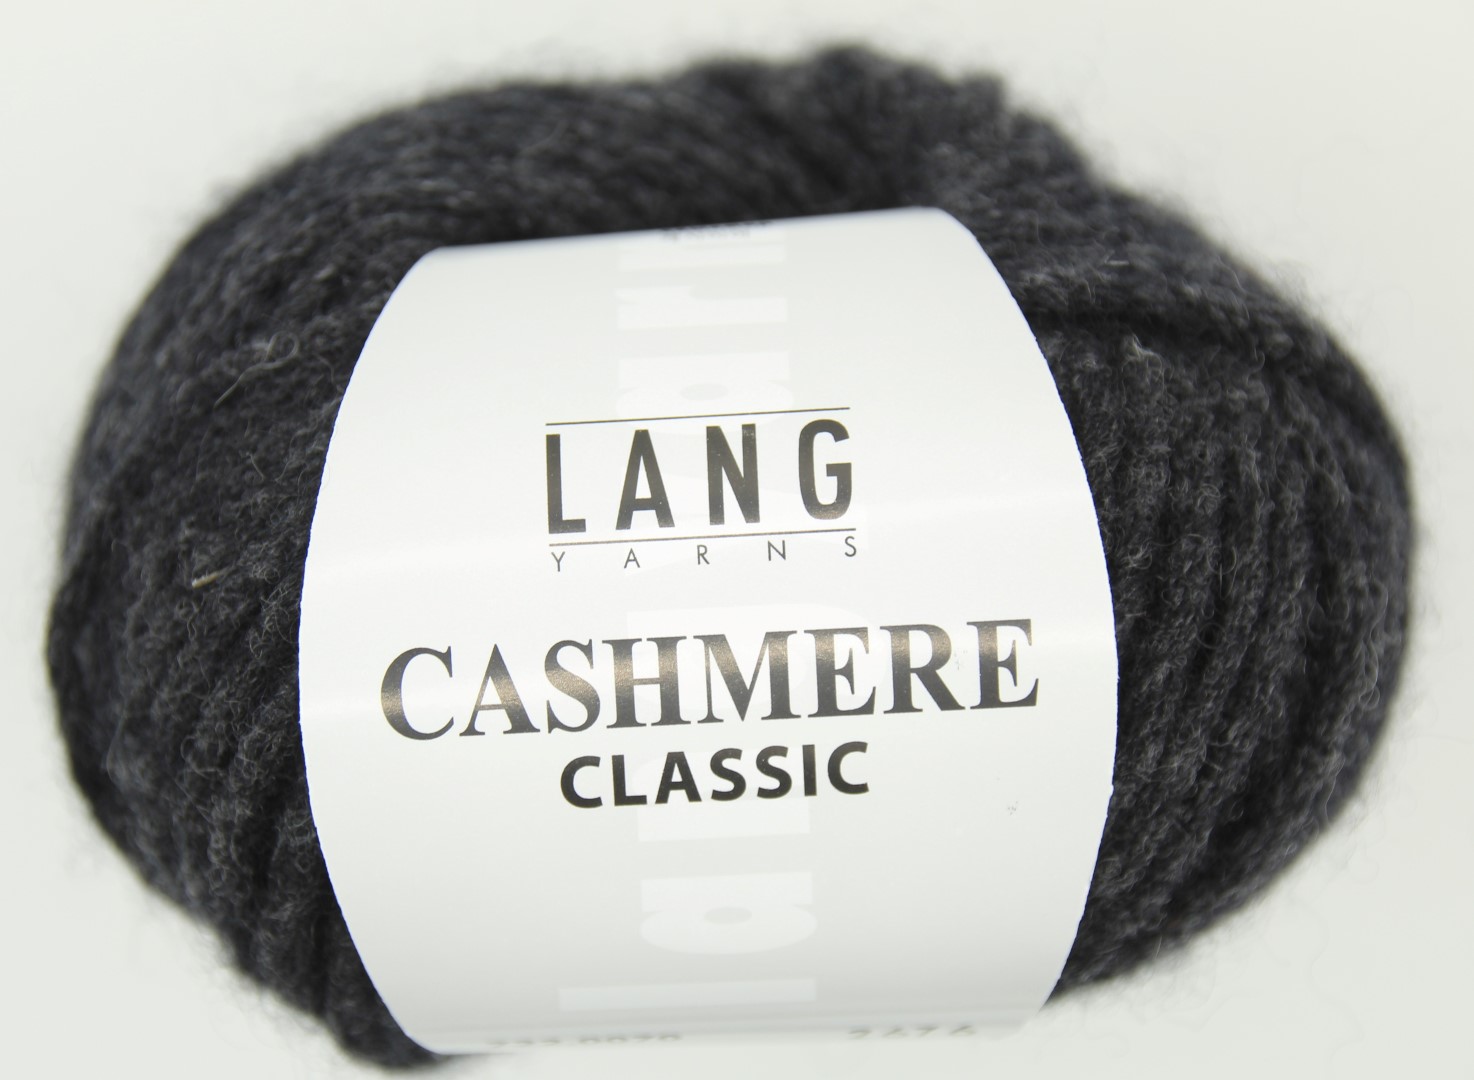 CASHMERE CLASSIC LANG YARNS COLORIS 67 (3) (Large)